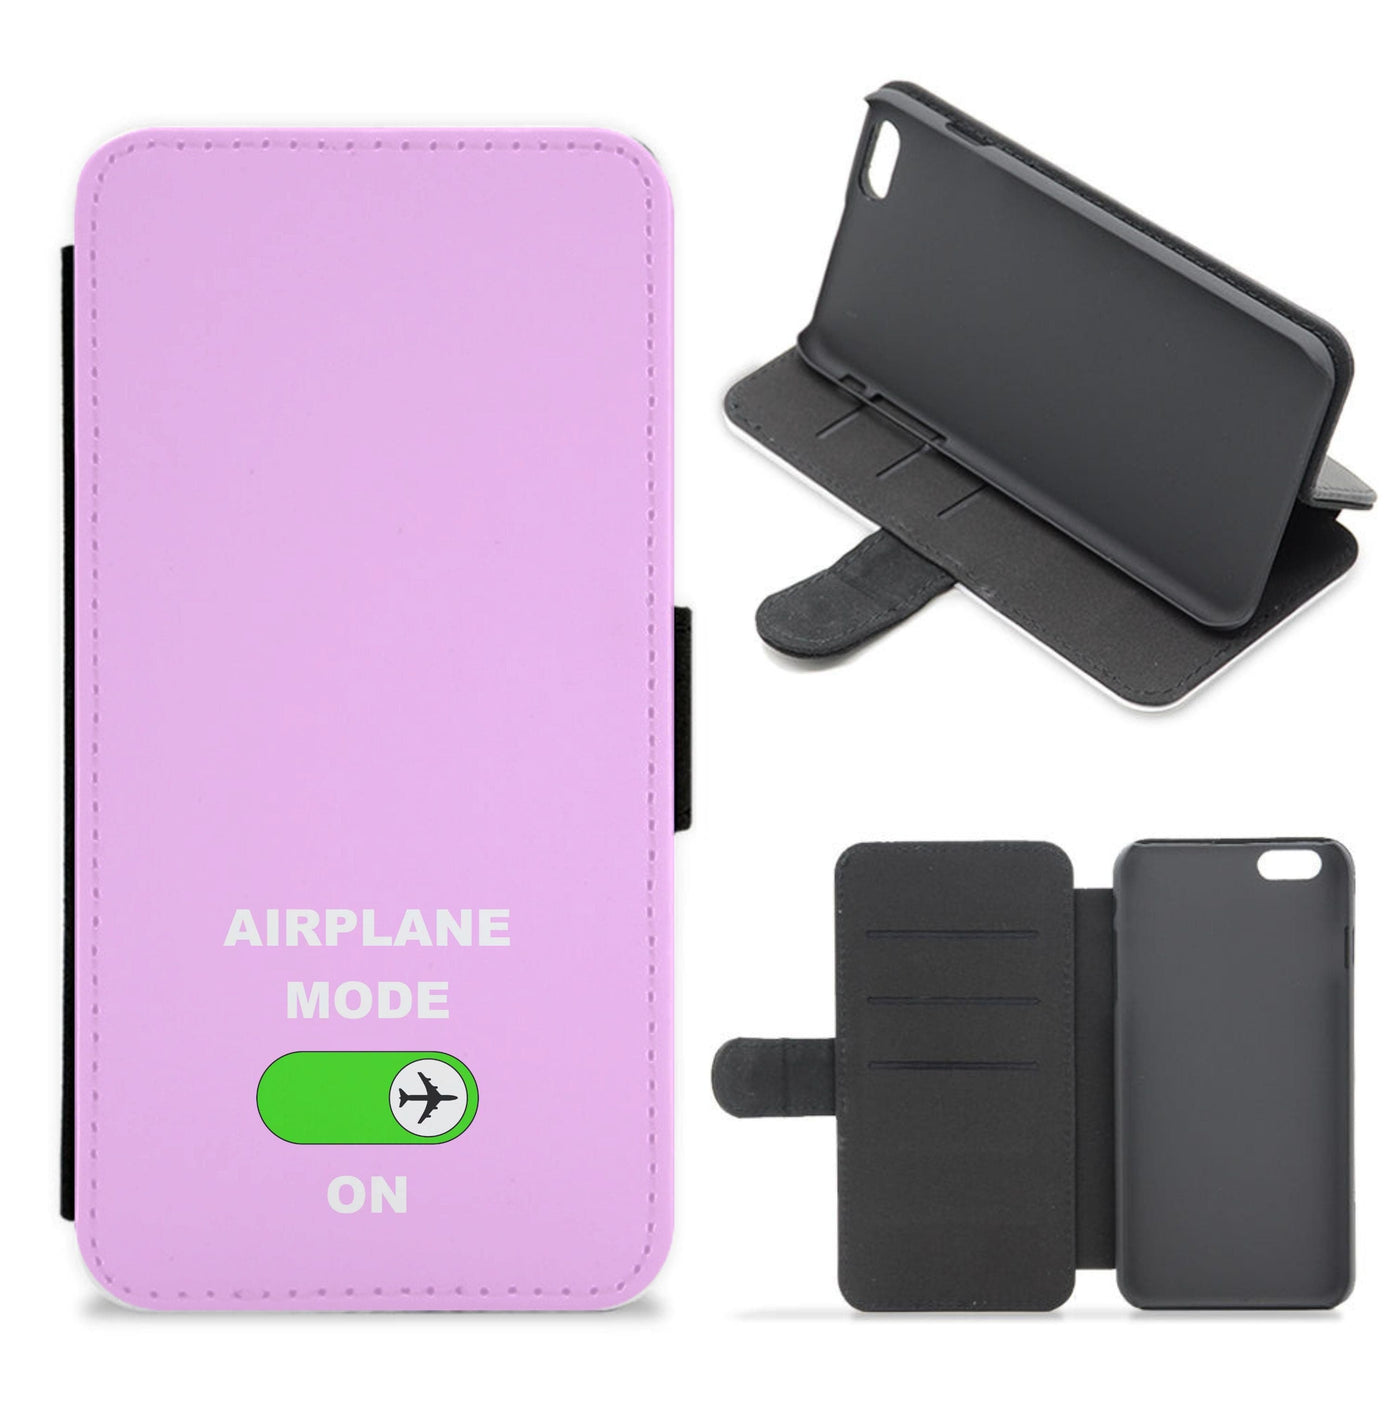 Airplane Mode On - Travel Flip / Wallet Phone Case